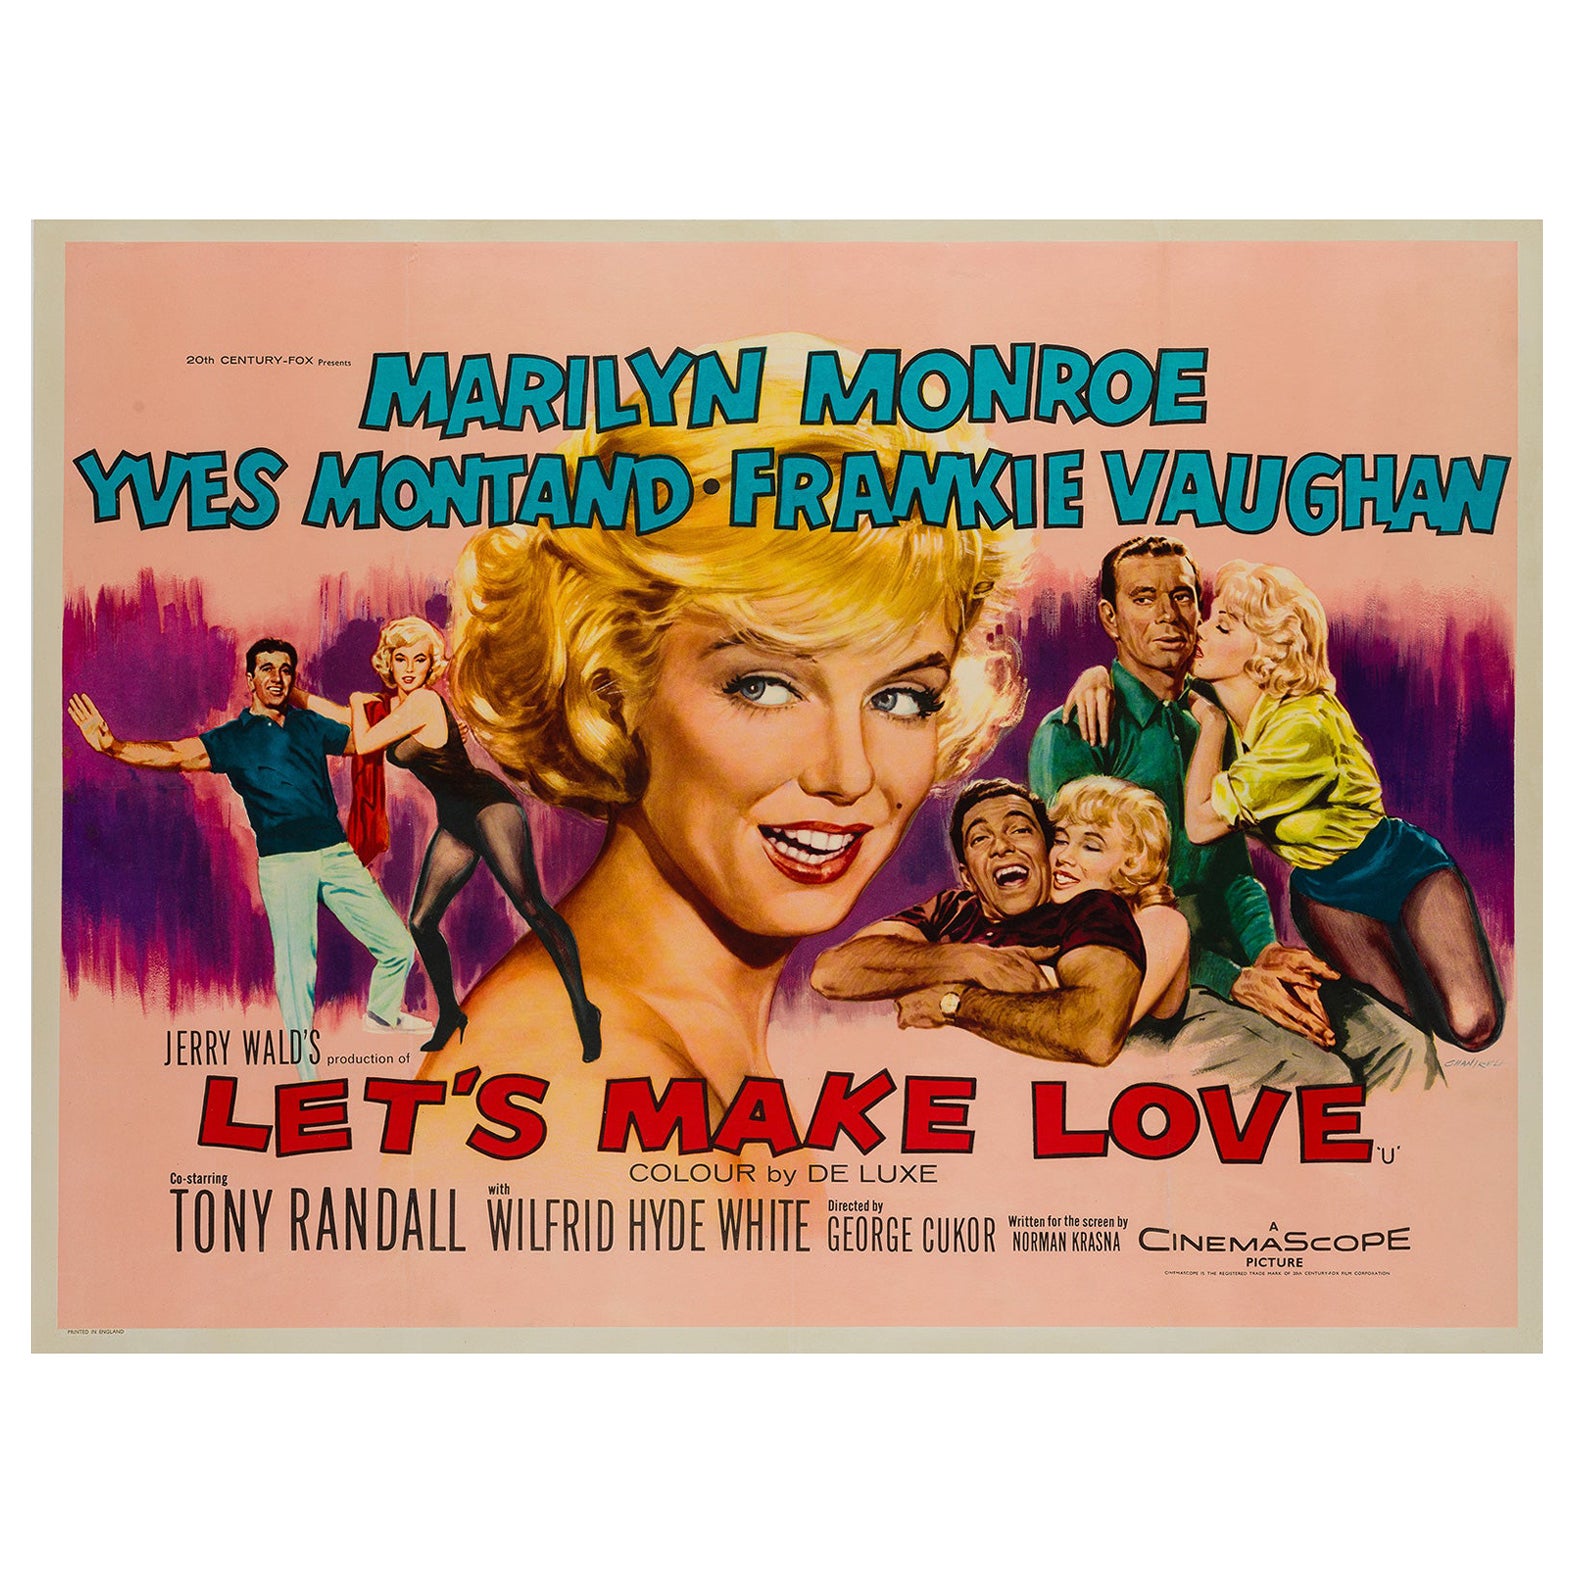 Let's Make Love Original UK Film Poster, Tom Chantrell, 1960 For Sale